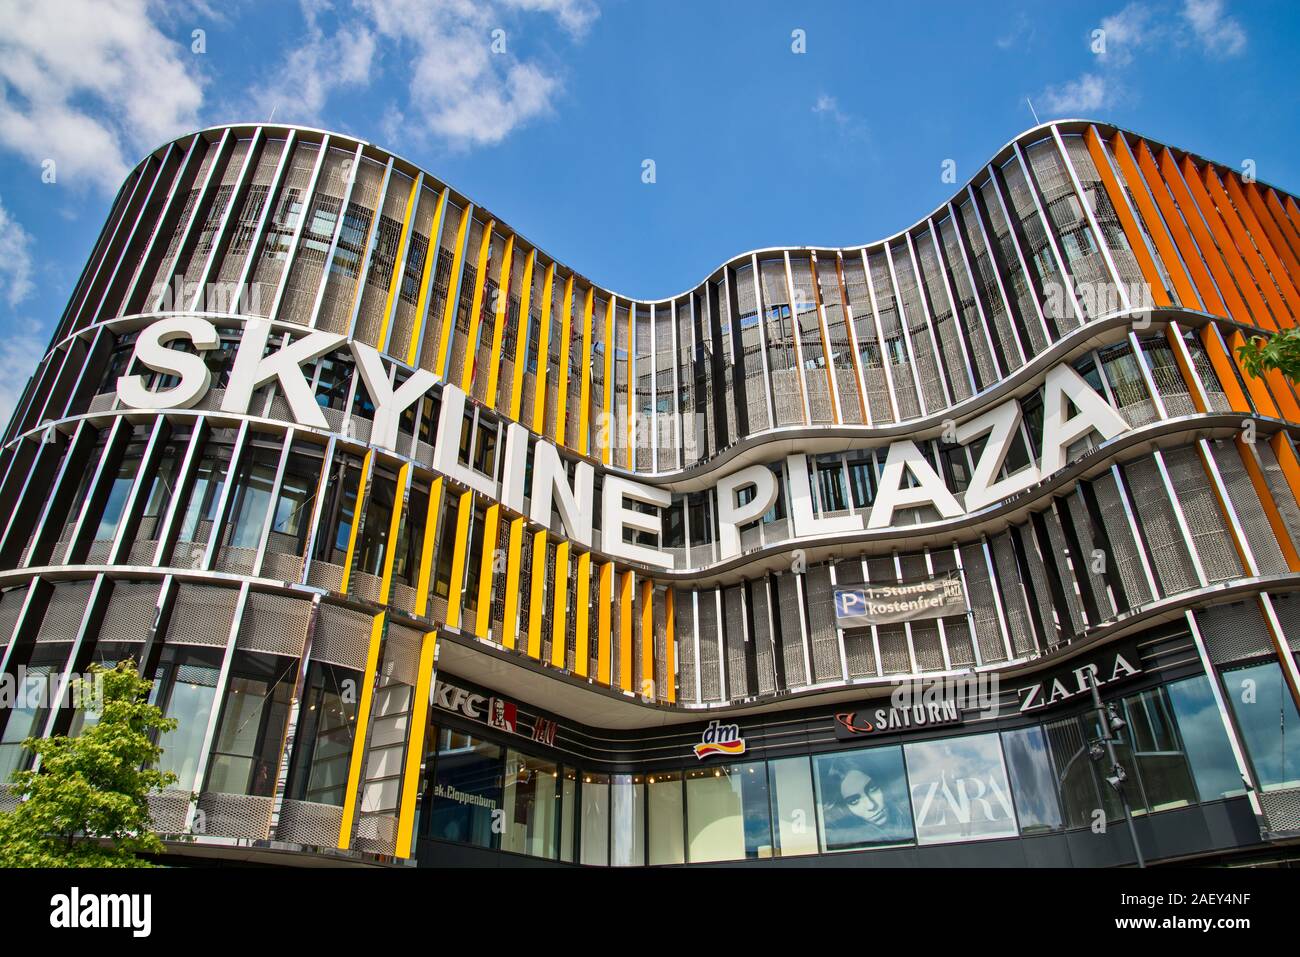 Skyline plaza frankfurt hi-res stock photography and images - Alamy